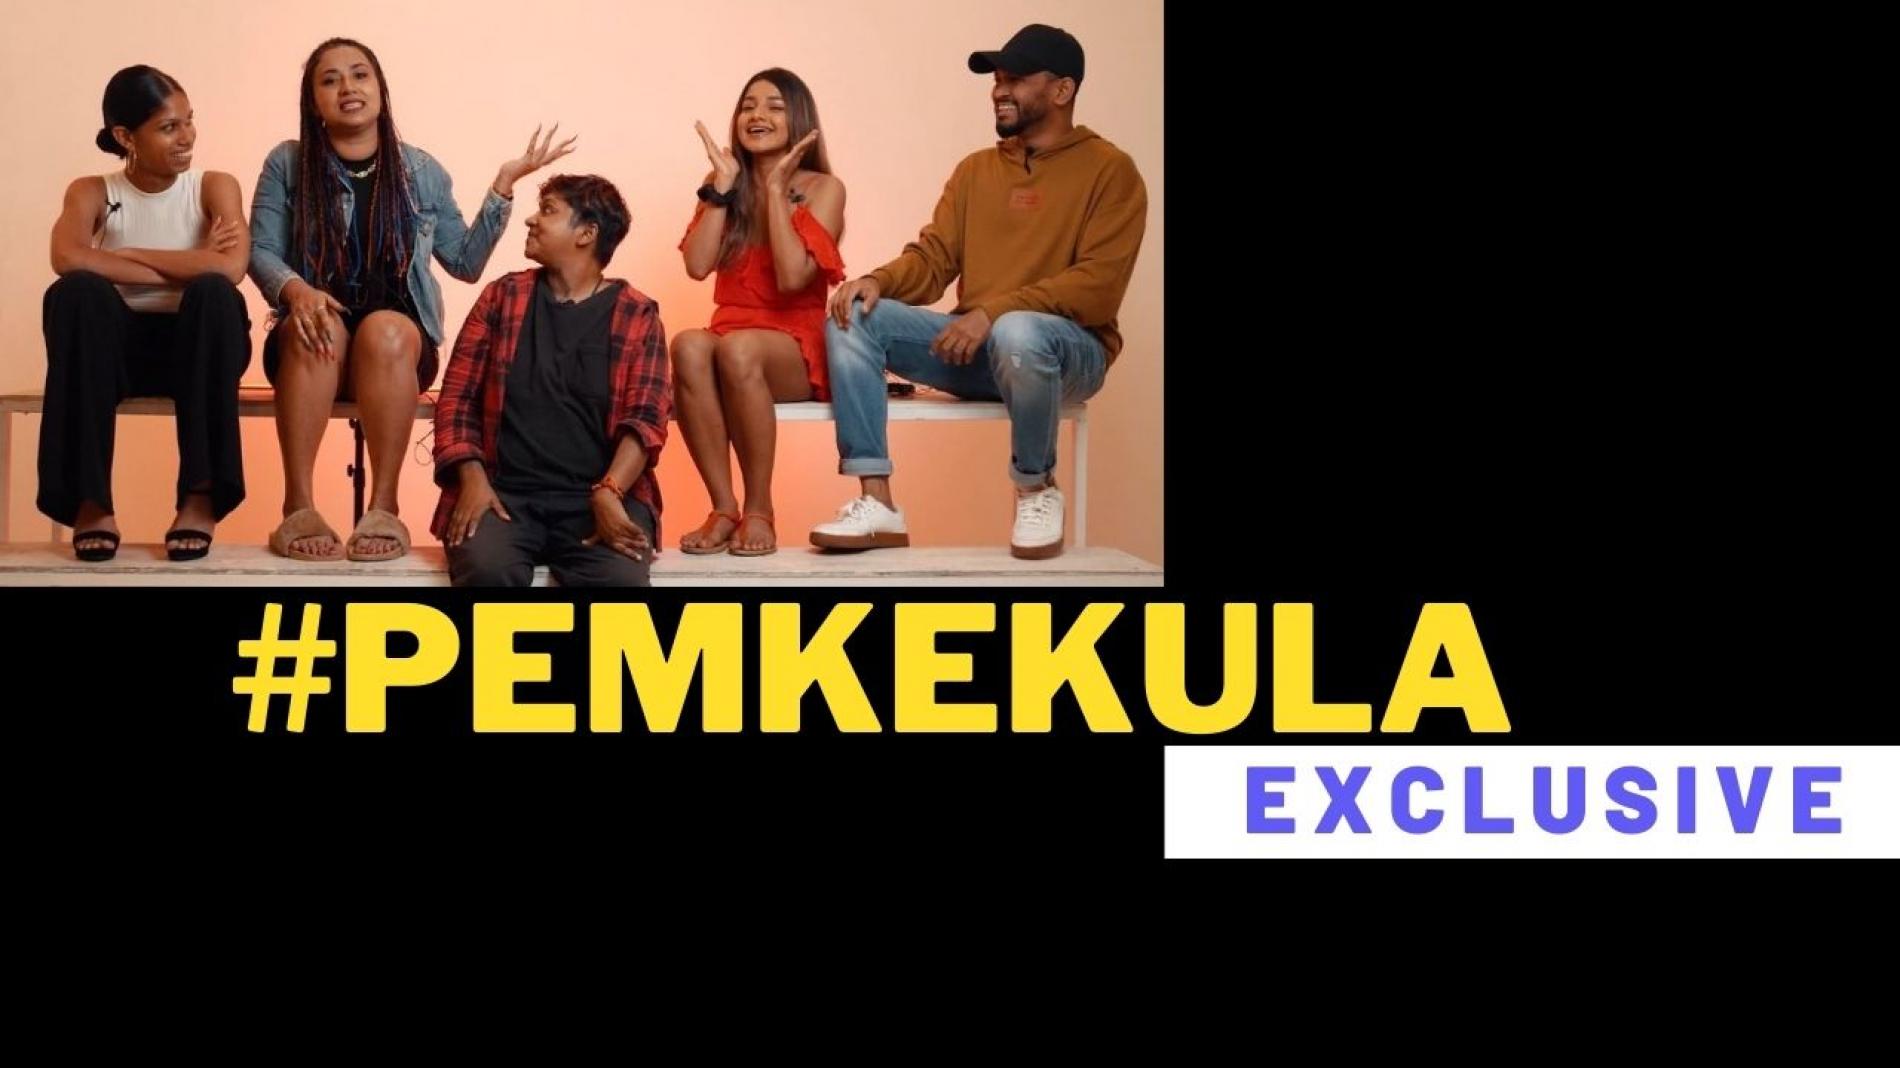 That #PemKekula Exclusive